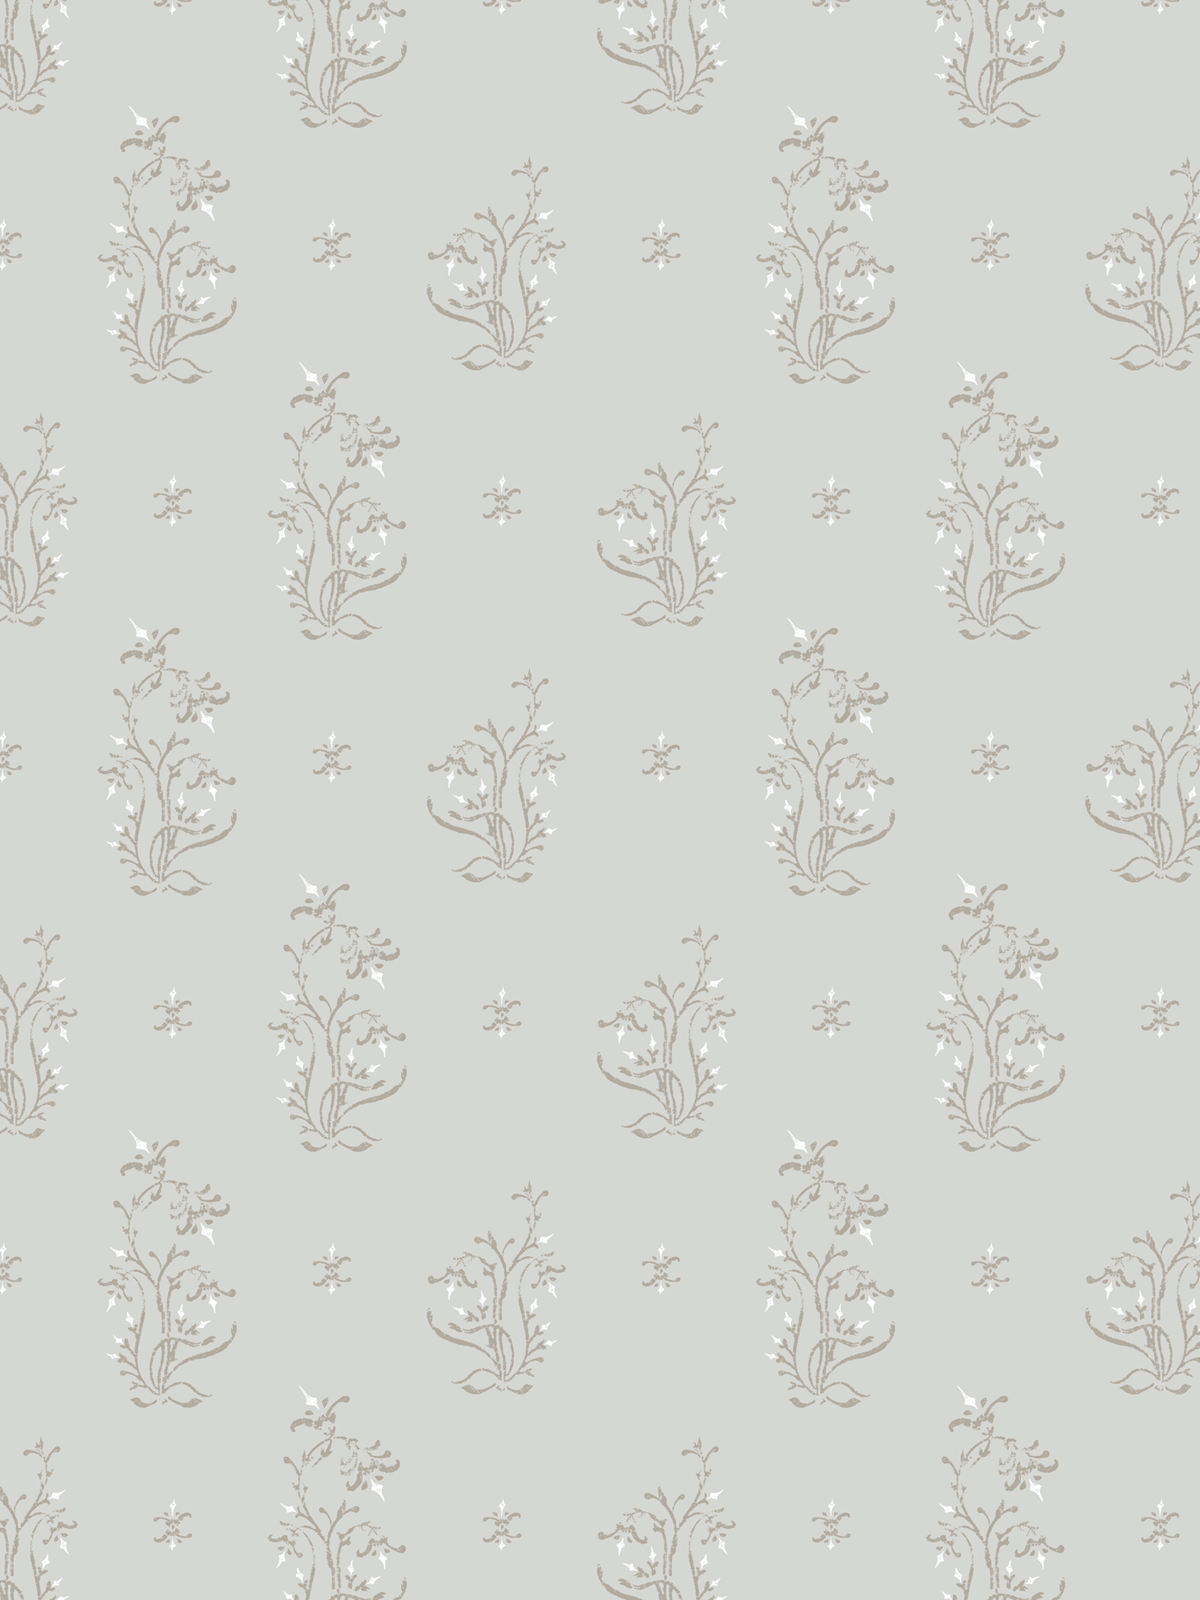 The Maker Botanical Wallpaper in Silver